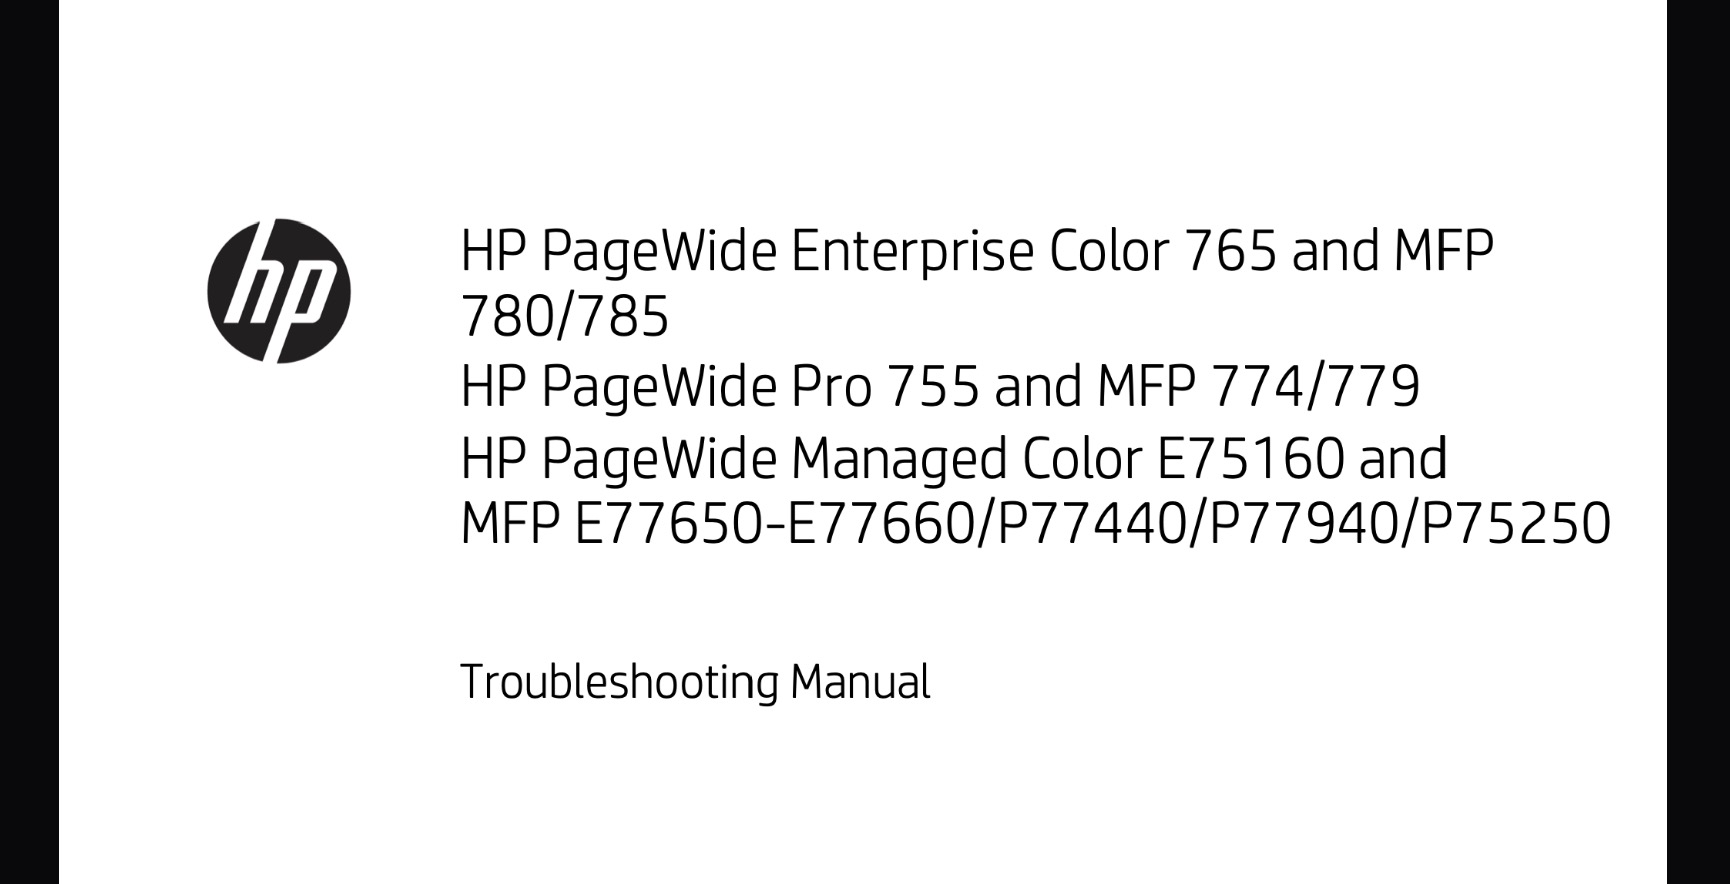 HP PageWide Enterprise Color 765, MFP 780, MFP 785, Pro 755, MFP 774, MFP 779, Managed Color E75160, MFP E77650, E77660, P77440, P77940, P75250 Service Troubleshooting Manual,  Parts List and Diagrams